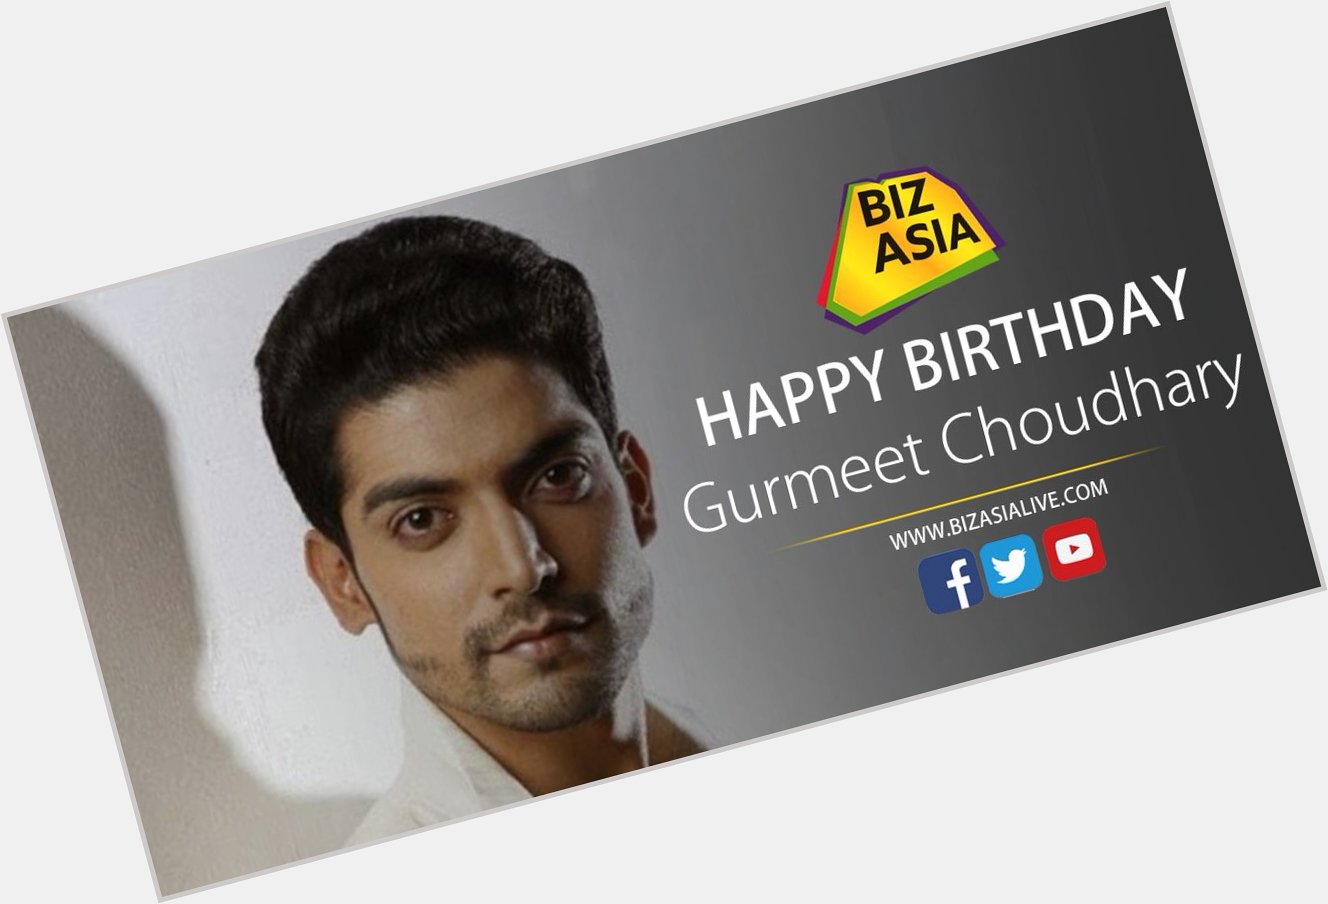  wishes Gurmeet Choudhary a very happy birthday.  